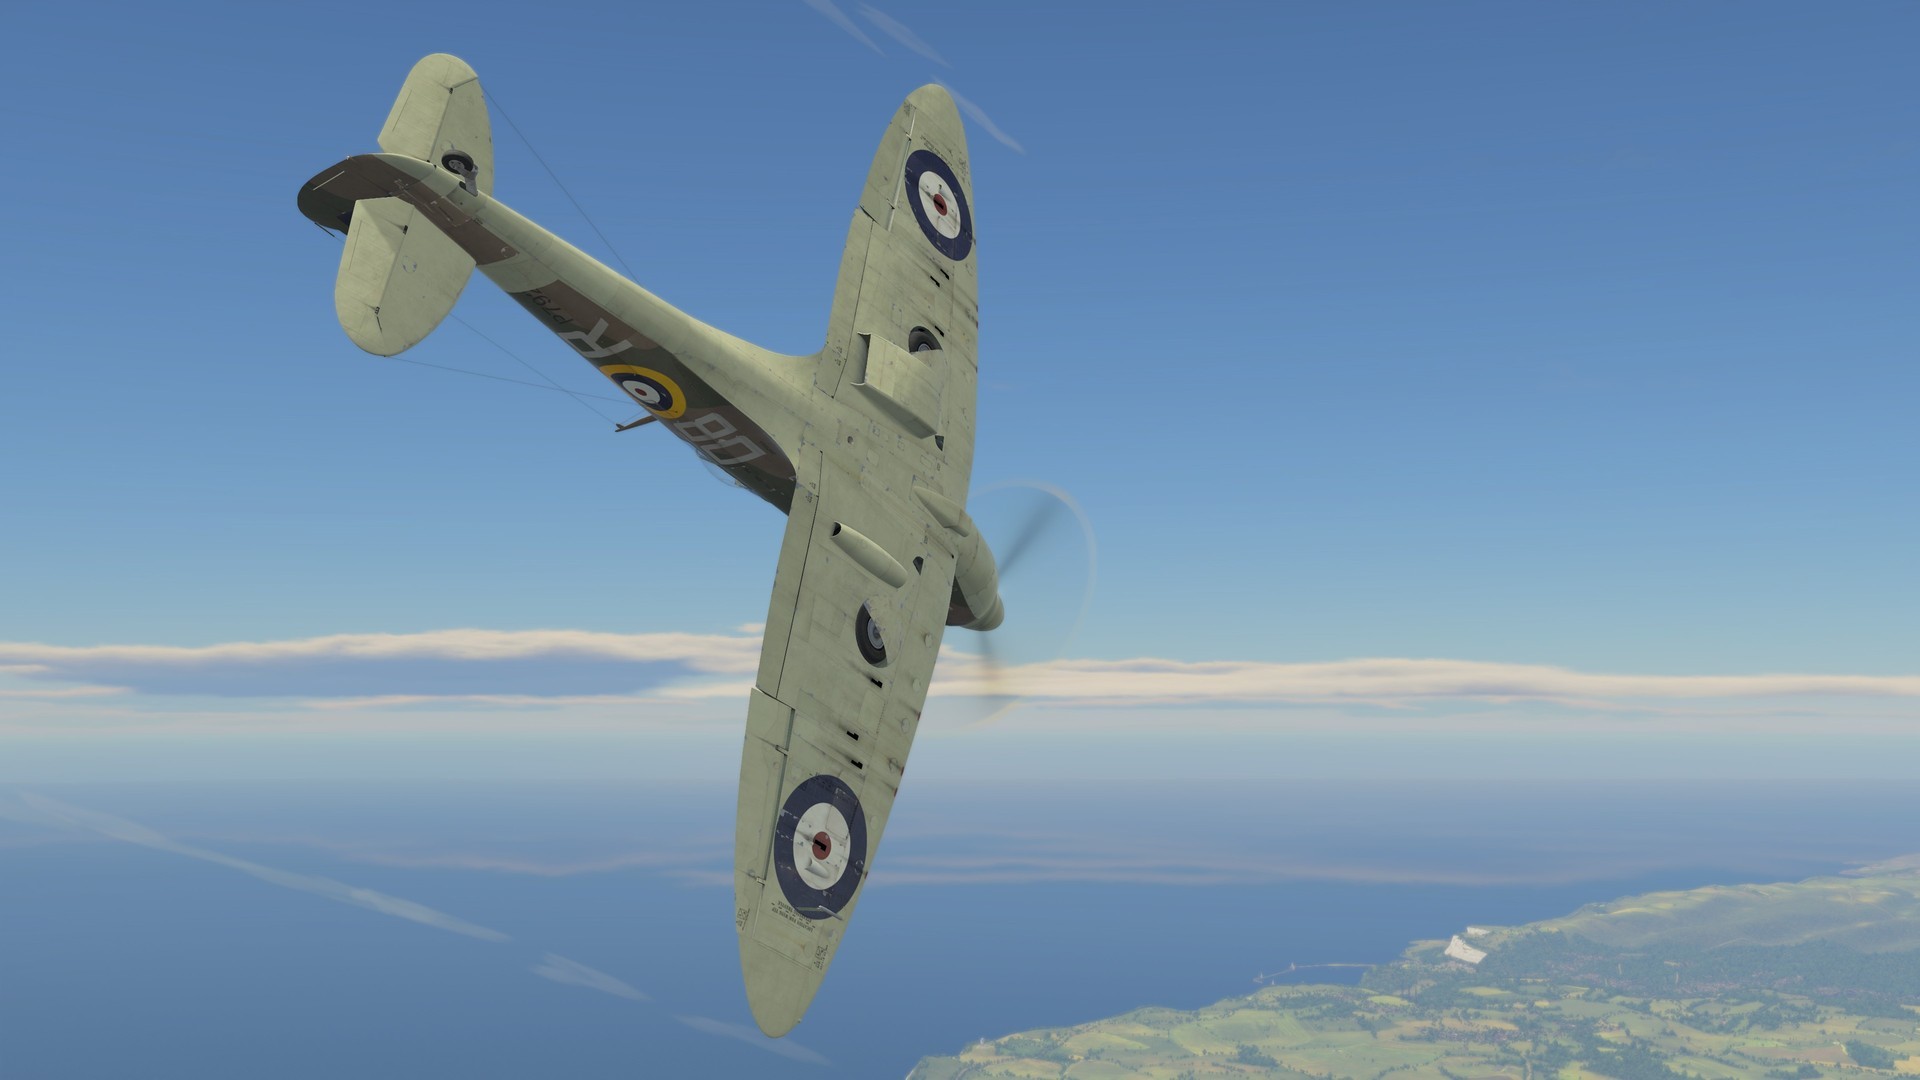 War Thunder British Starter Pack On Steam